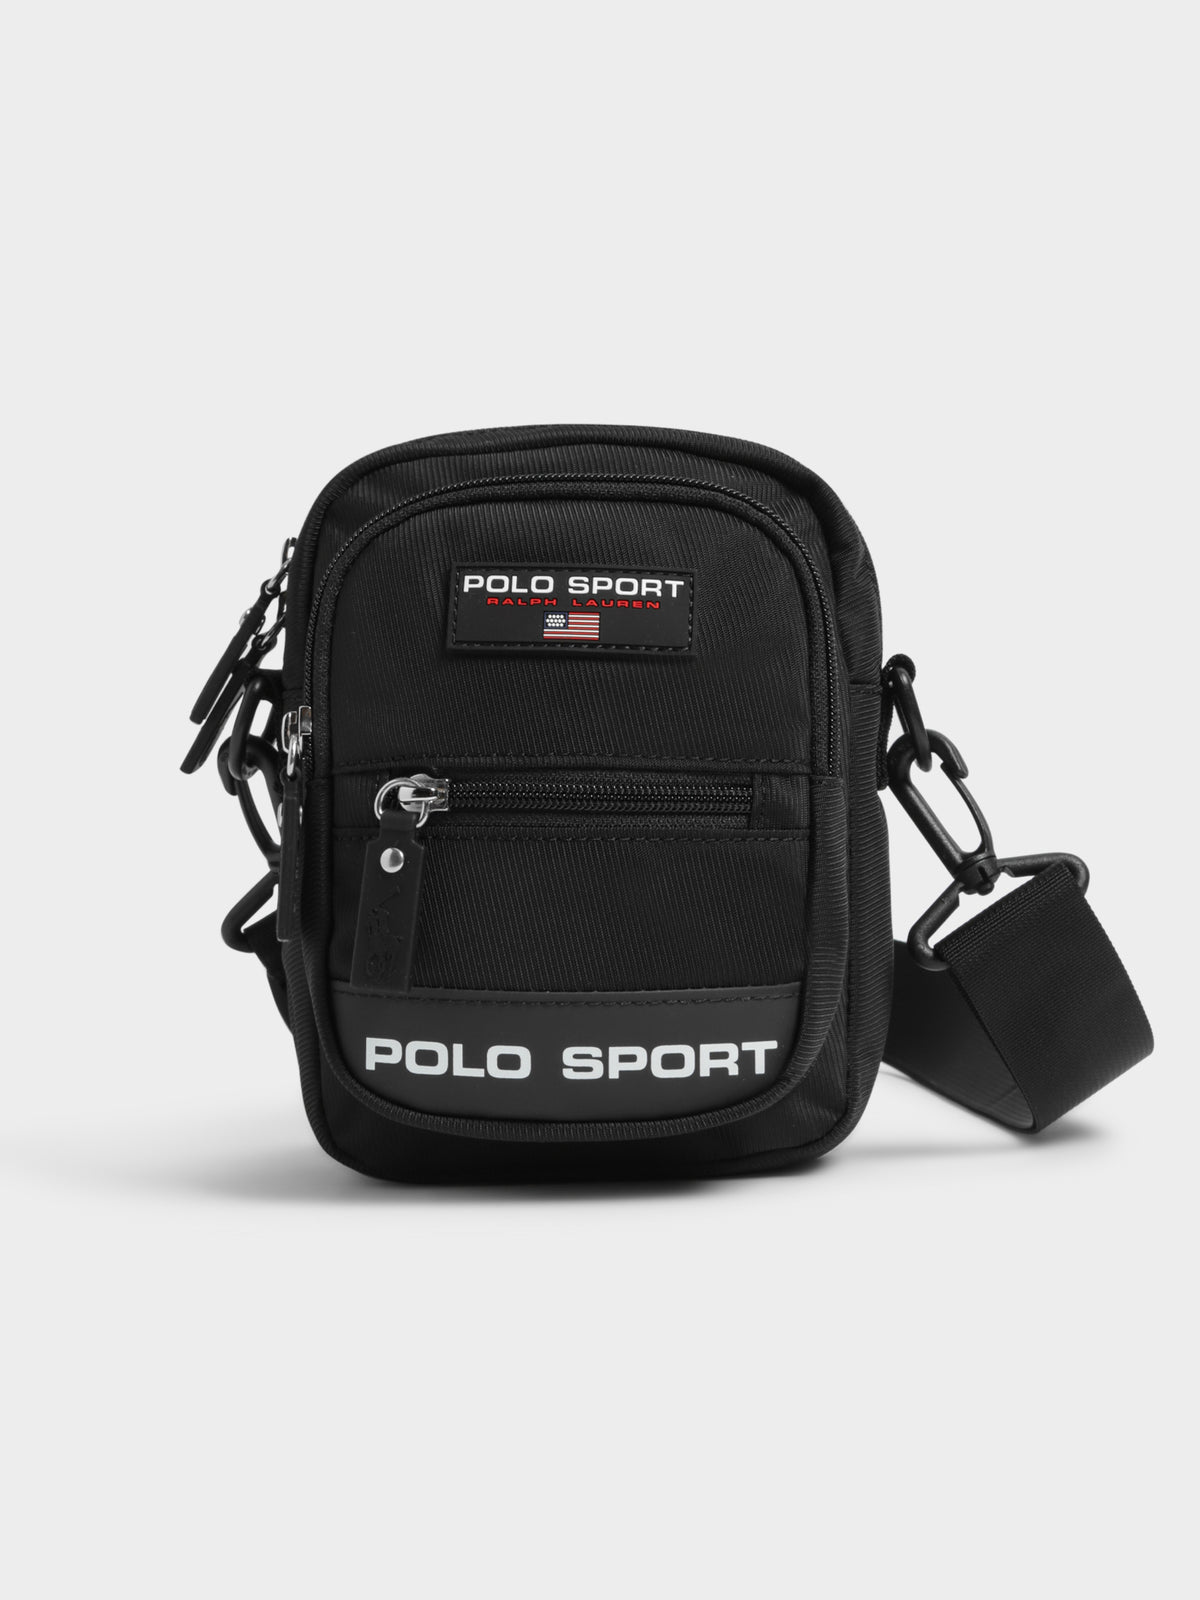 Polo Sport Cross Body Bag in Black